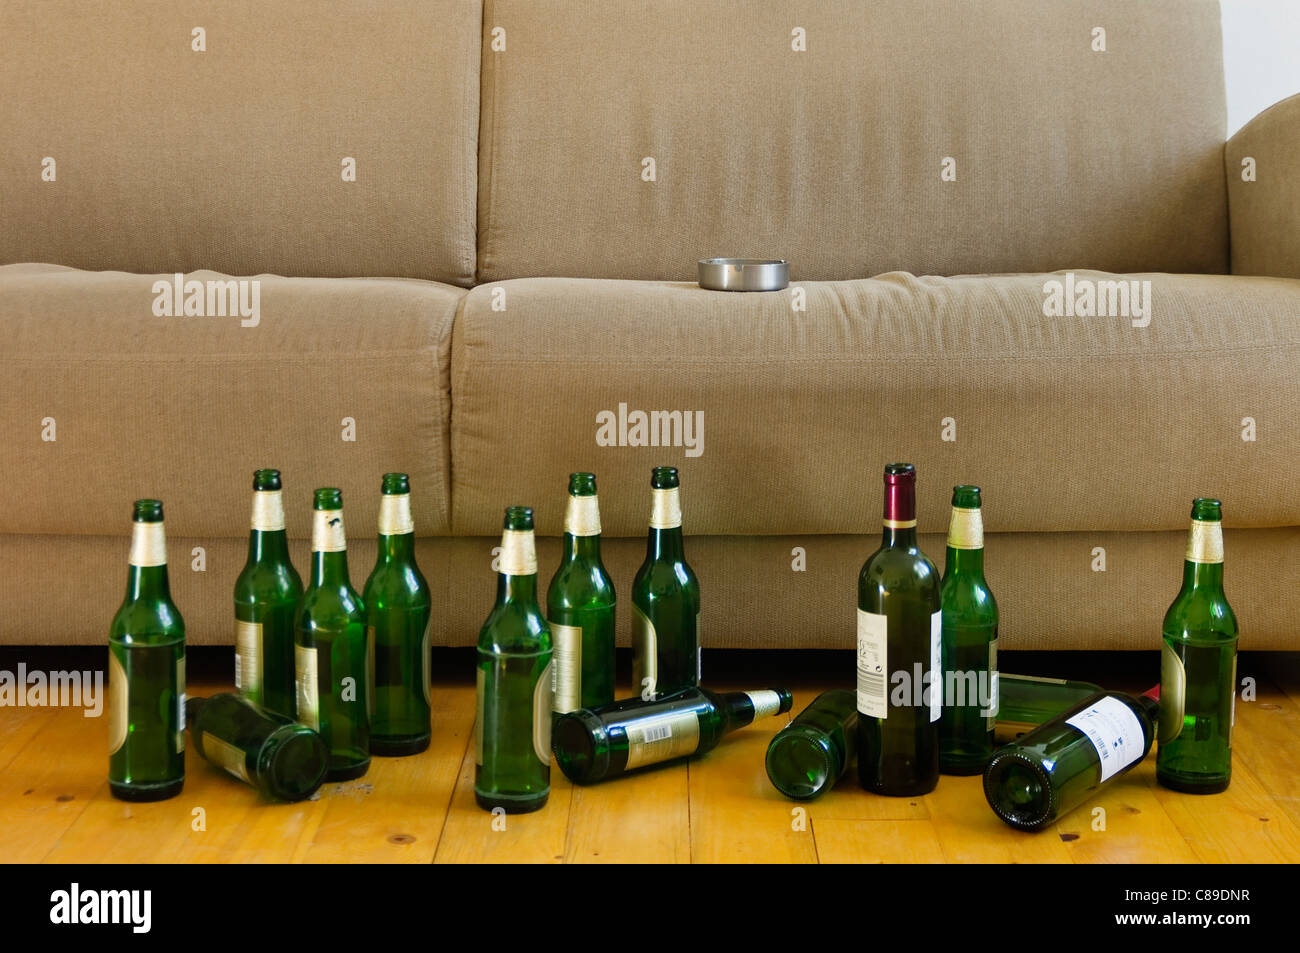 Germany, Hessen, Frankfurt, Sofa with empty beer bottles Stock Photo